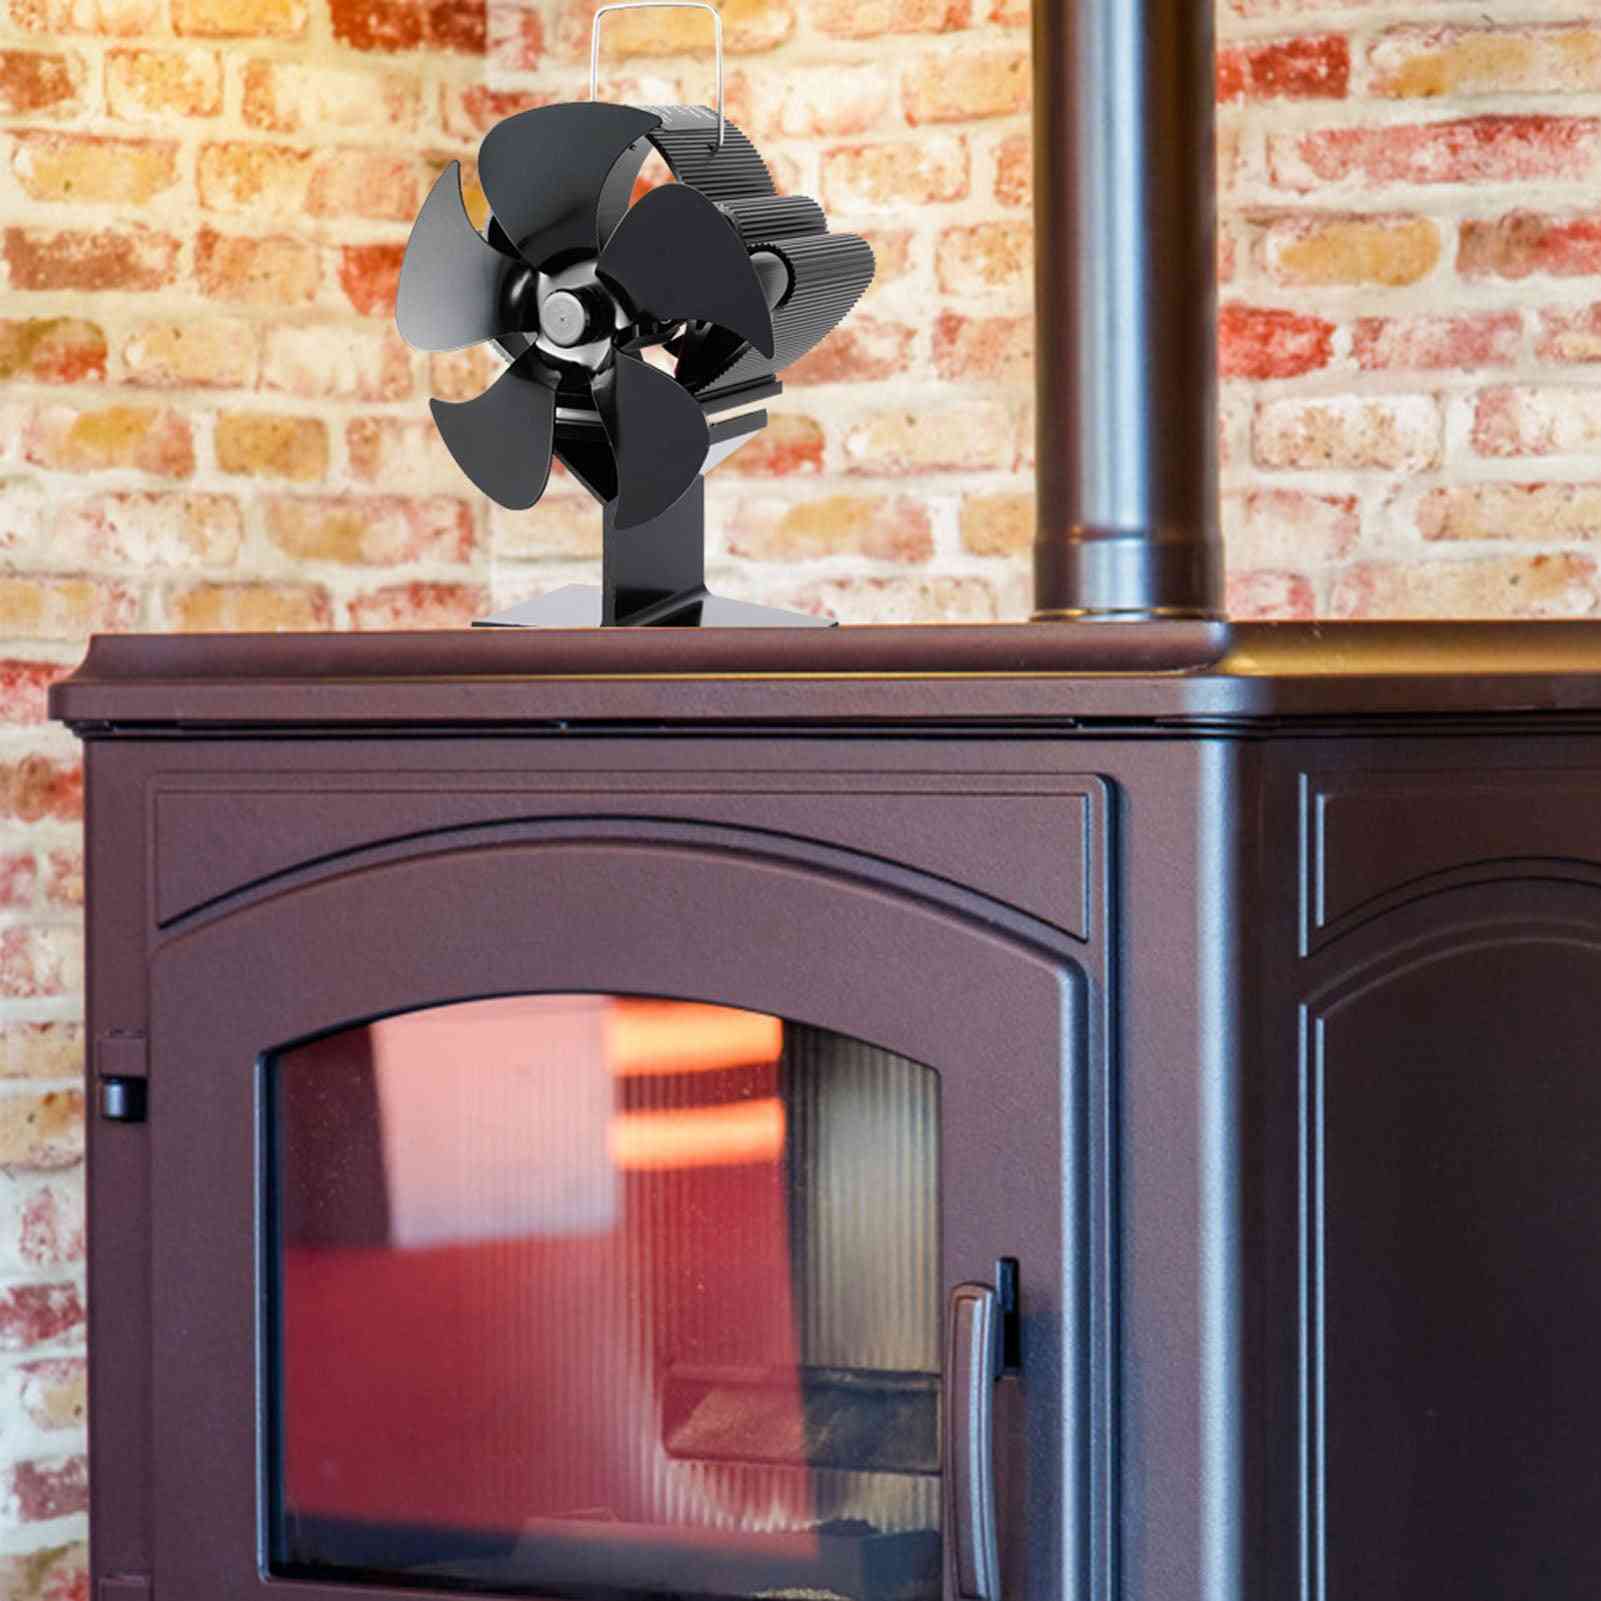 5 Blades Fireplace Heat Power Heating Stove Fan